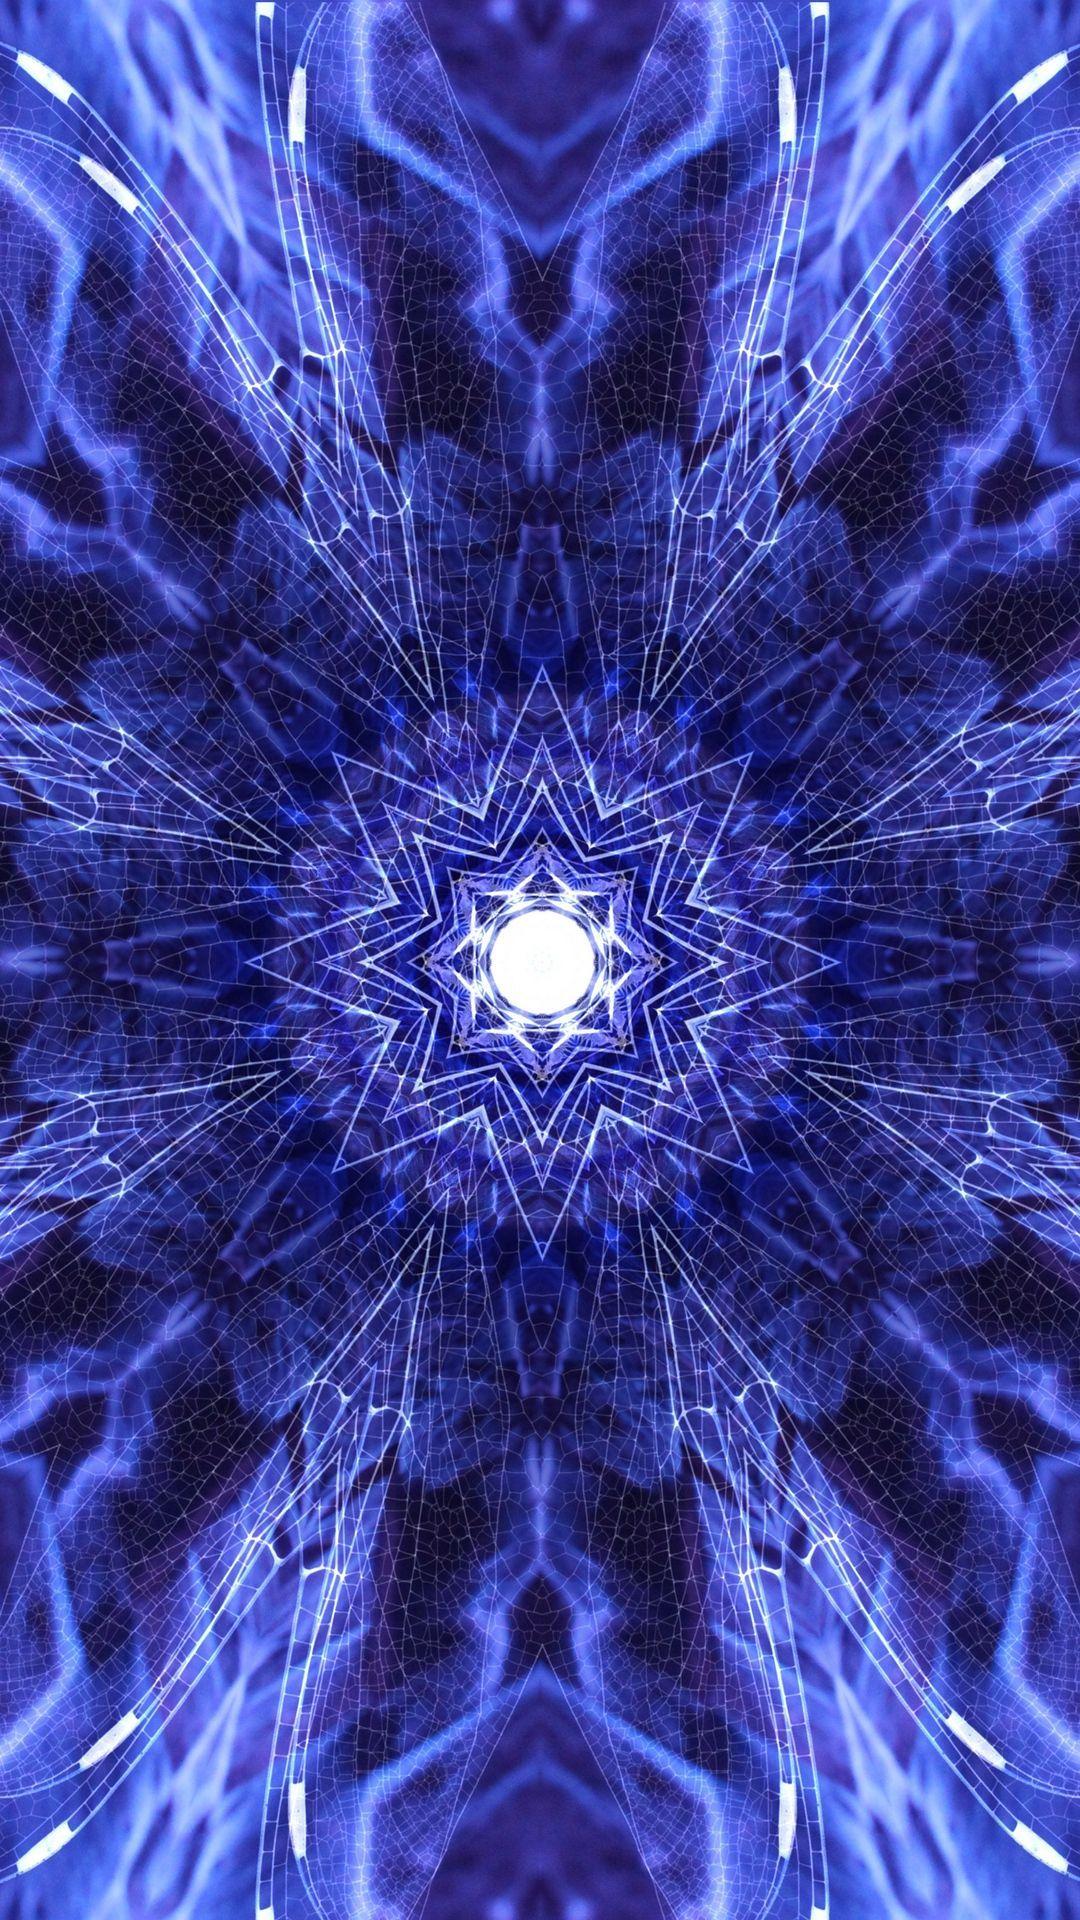 Blue, Electric blue, Fractal art, Purple, Symmetry, Psychedelic art